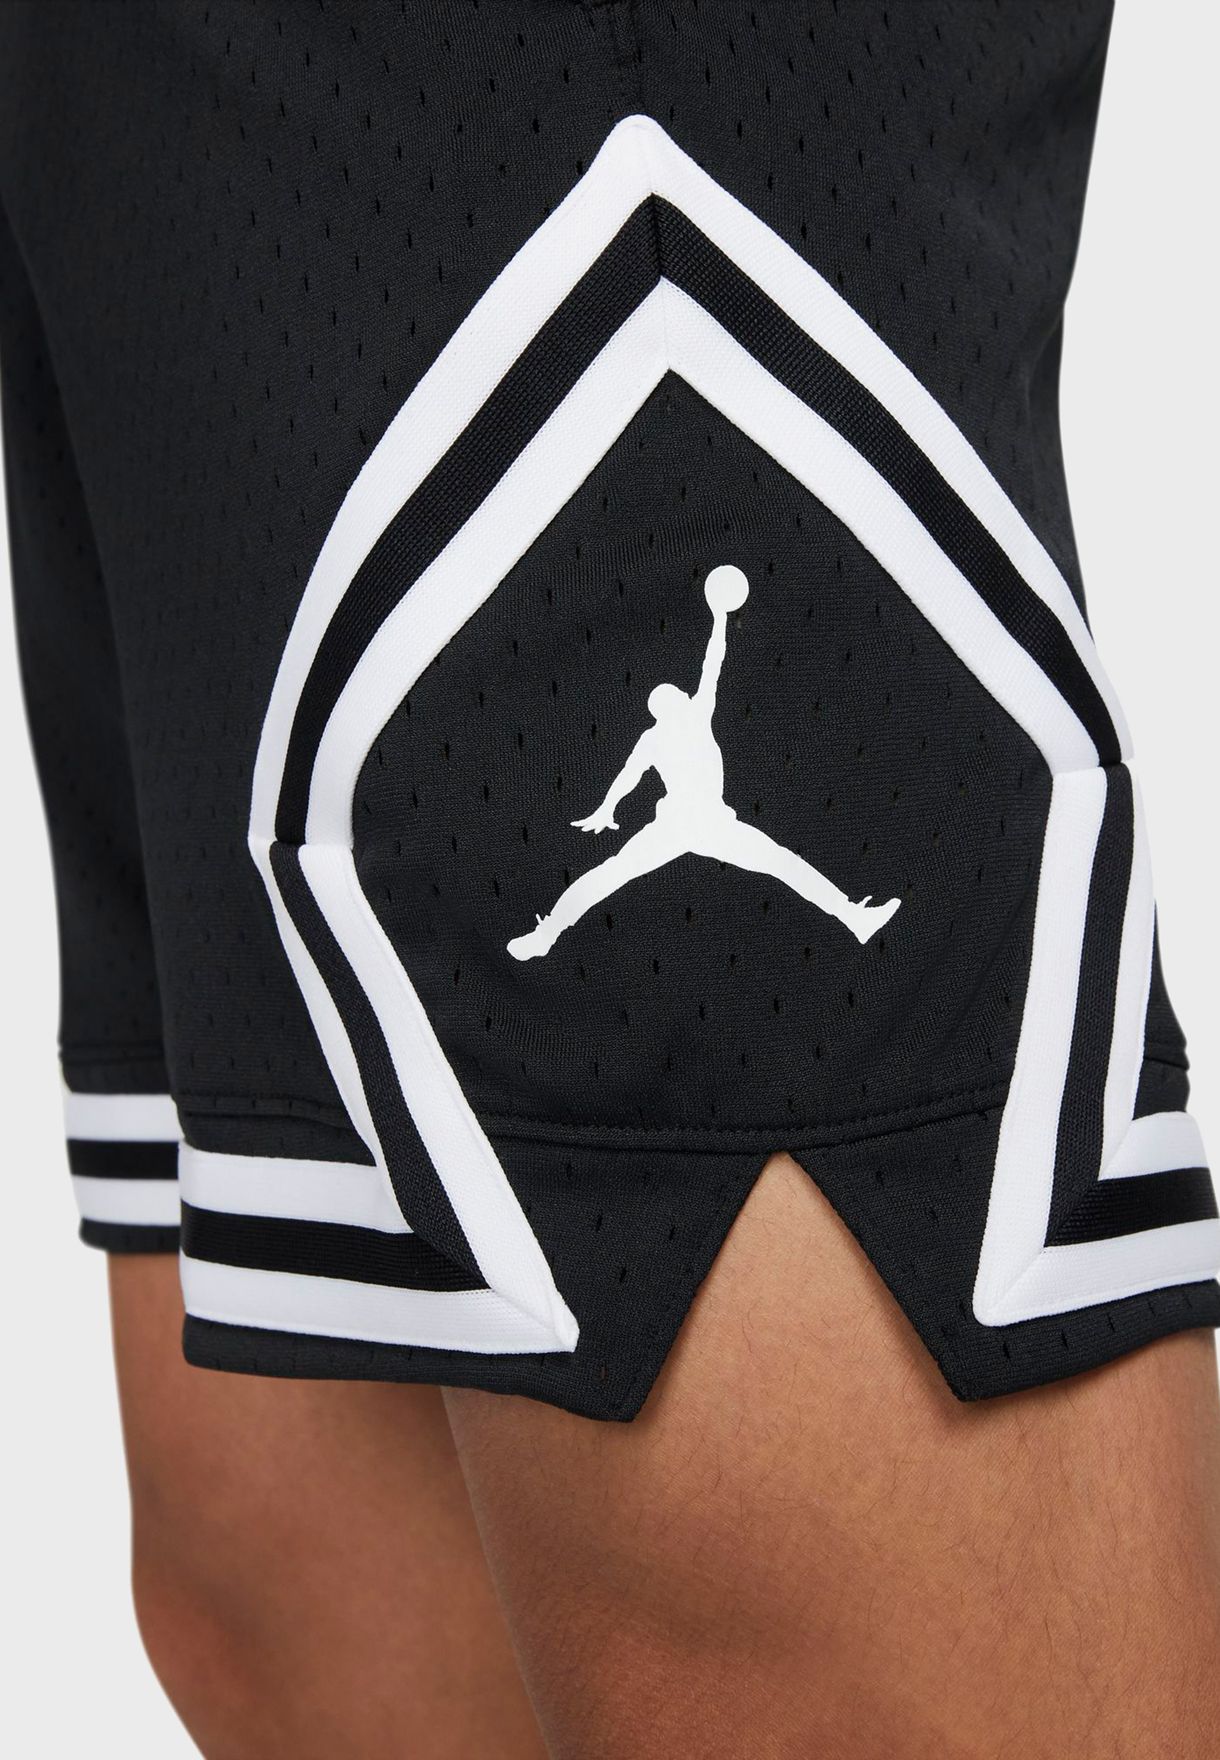 Jordan Diamond Shorts